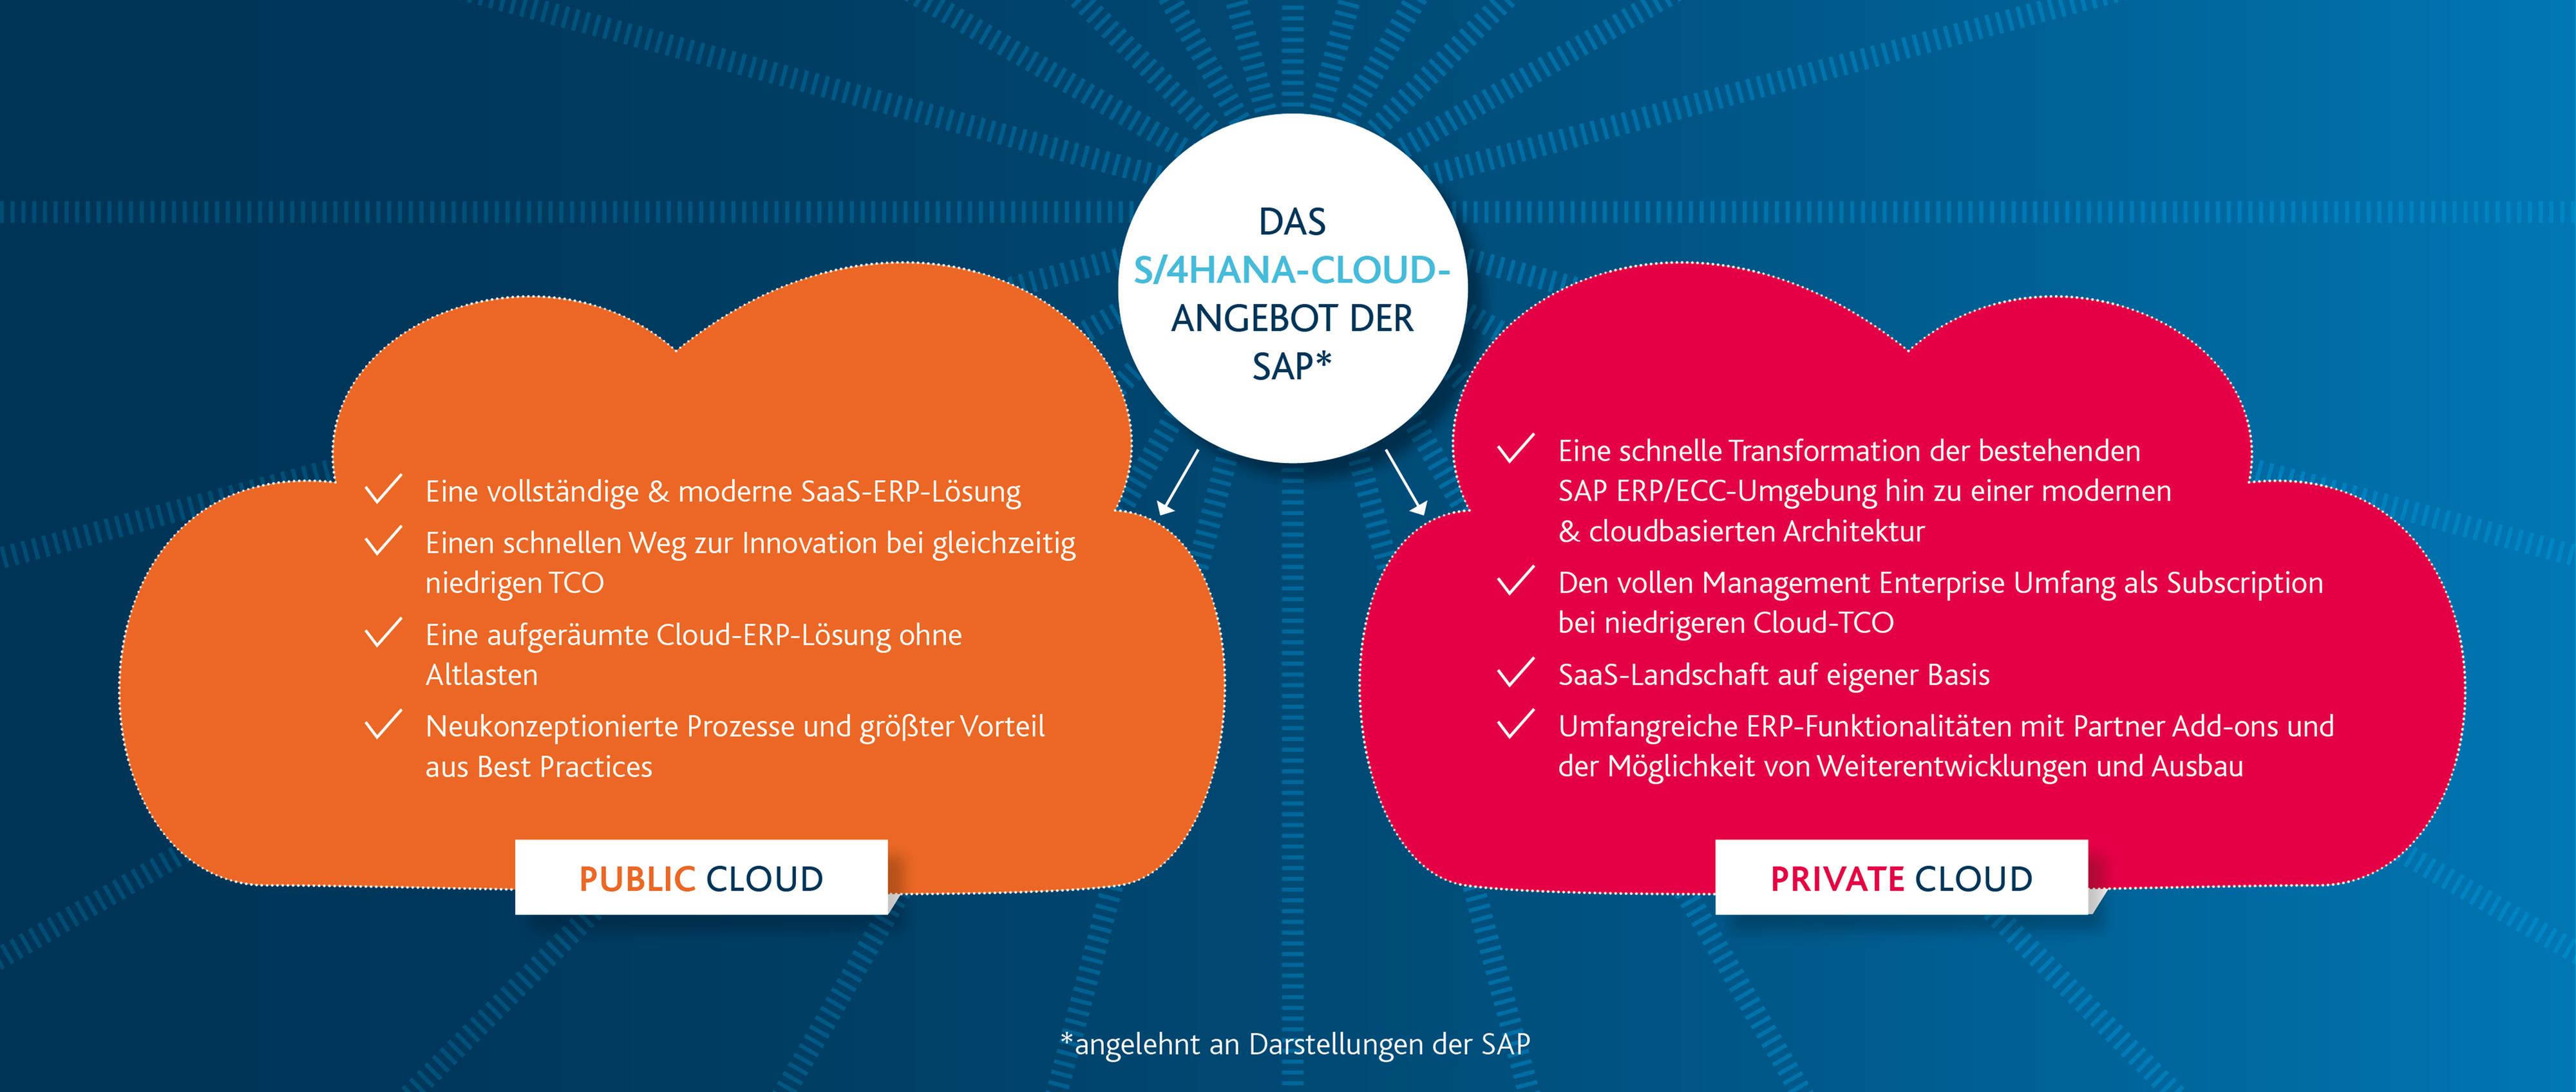 S/4HANA-Cloud-Angebot der SAP - Rise with SAP - Grafik